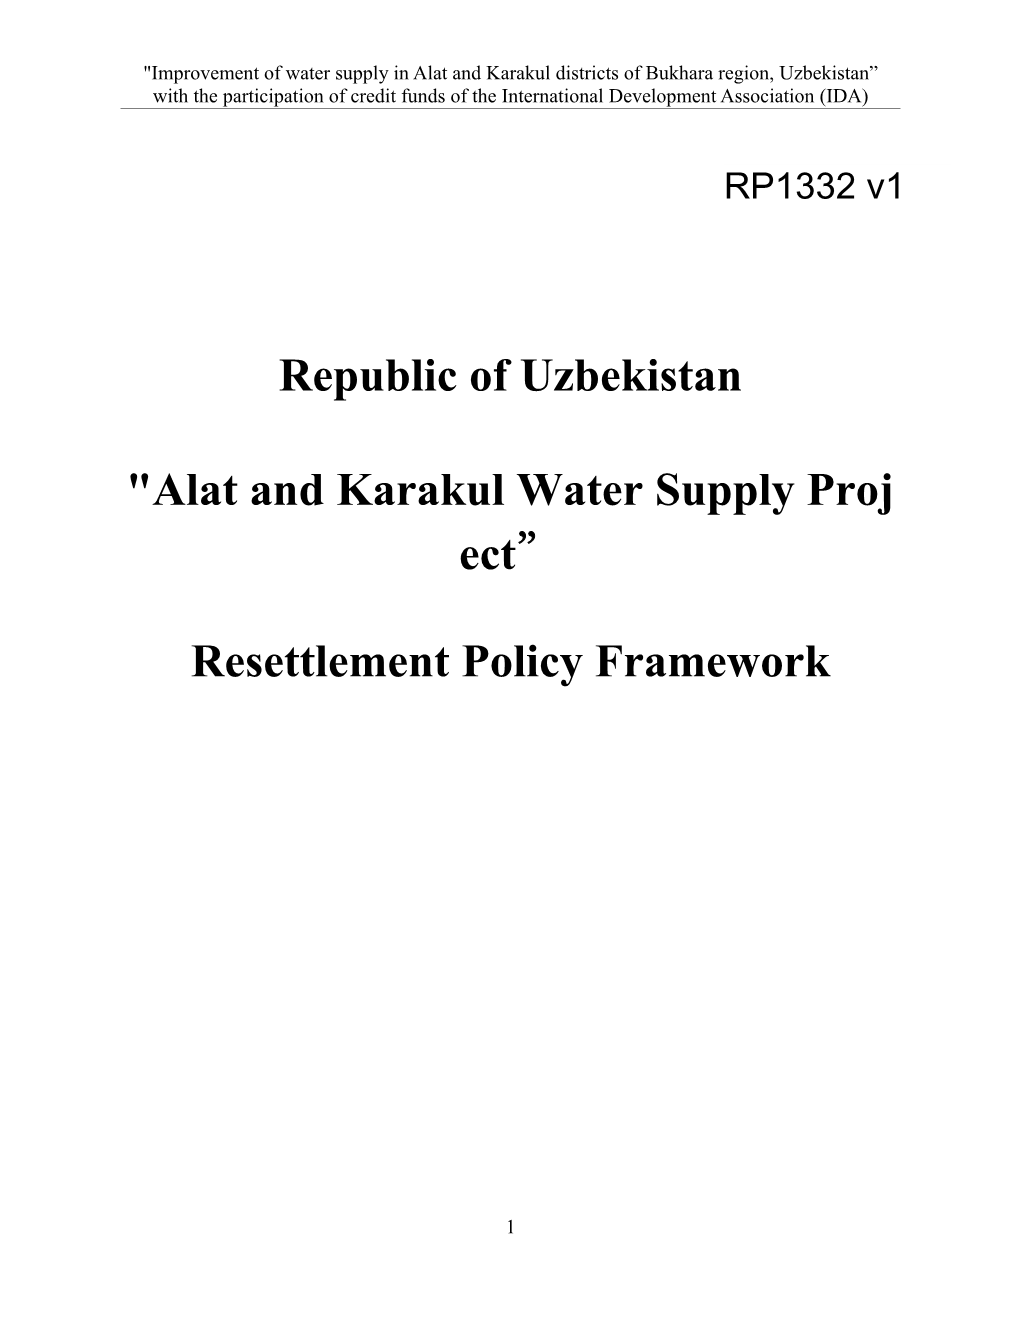 Improvement of Water Supply in Alat and Karakul Districts of Bukhara Region, Uzbekistan